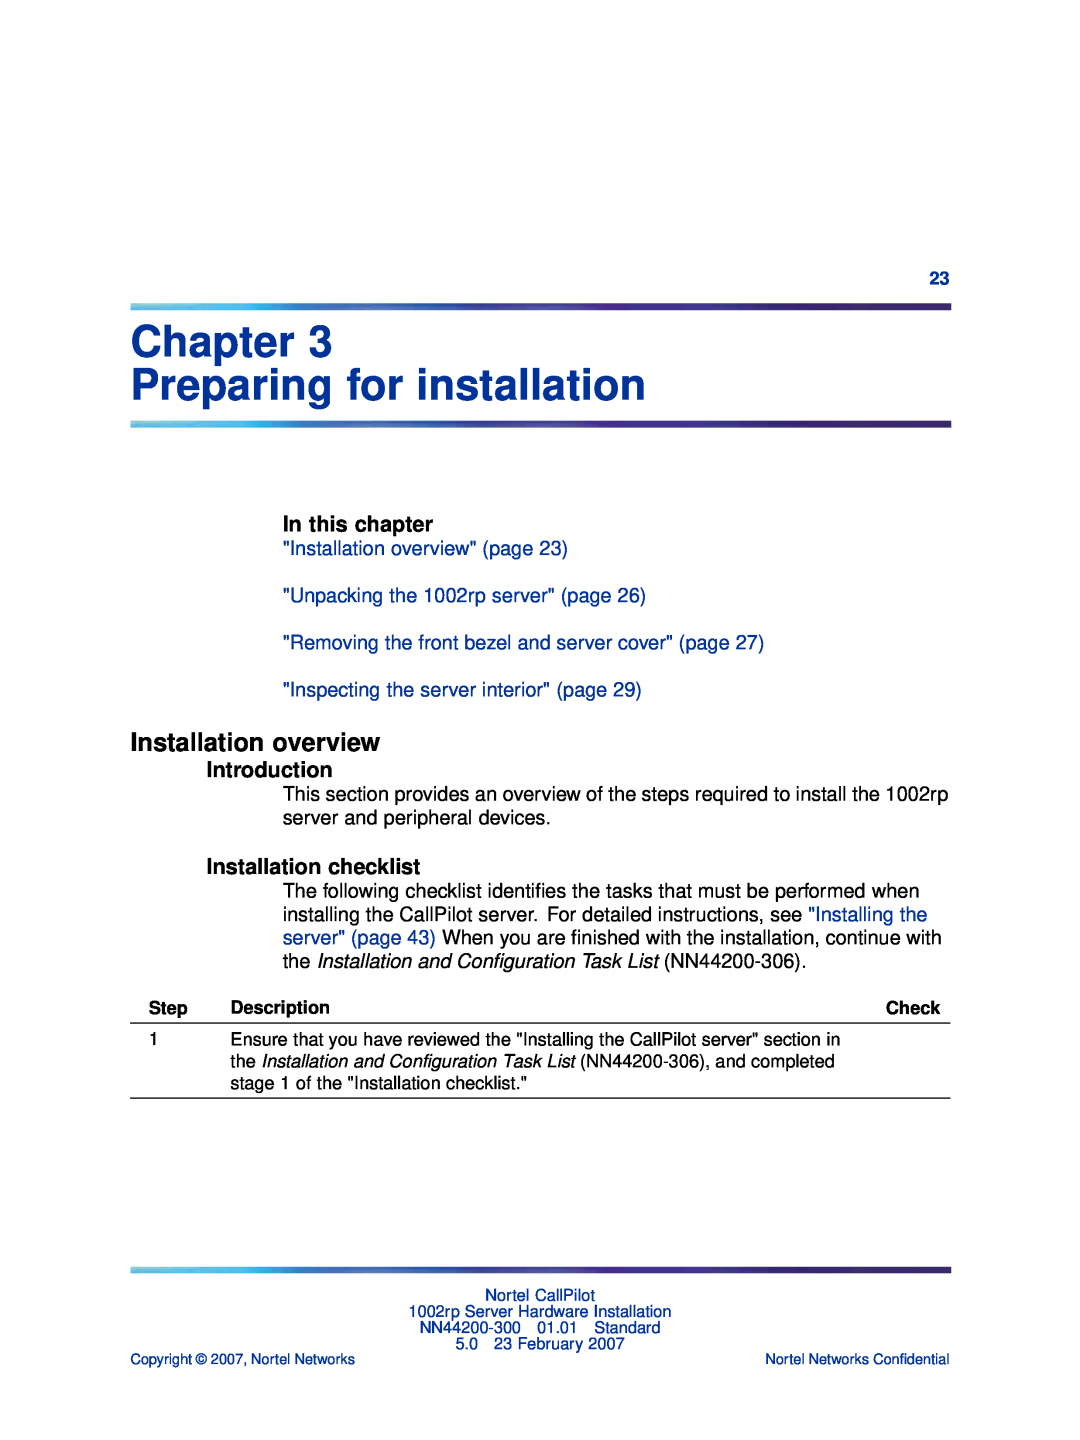 Nortel Networks NN44200-300 manual Chapter Preparing for installation, Installation overview, Installation checklist 